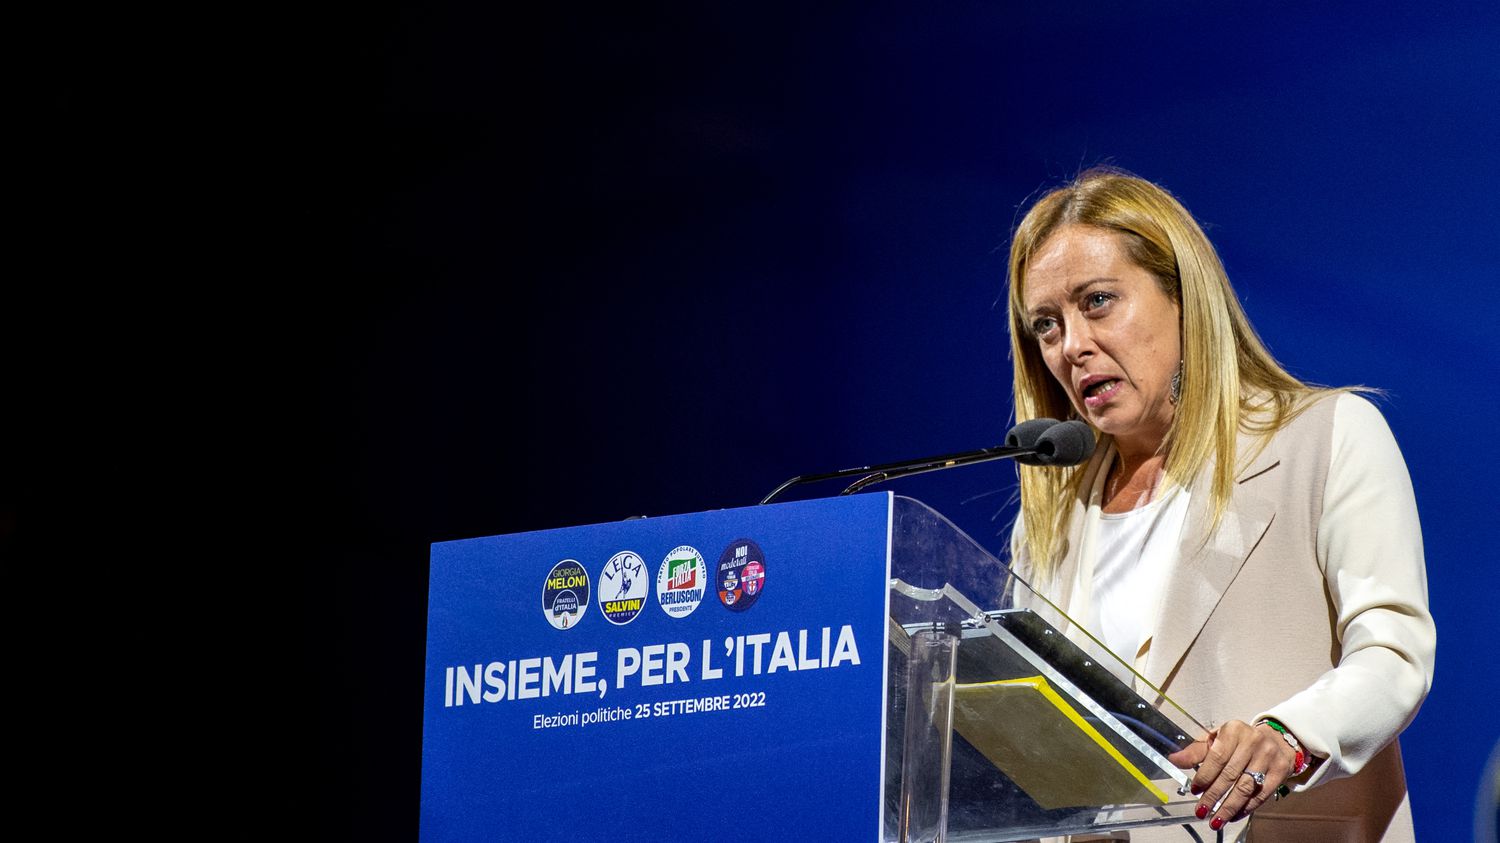 Legislative in Italy: the EU hopes for 